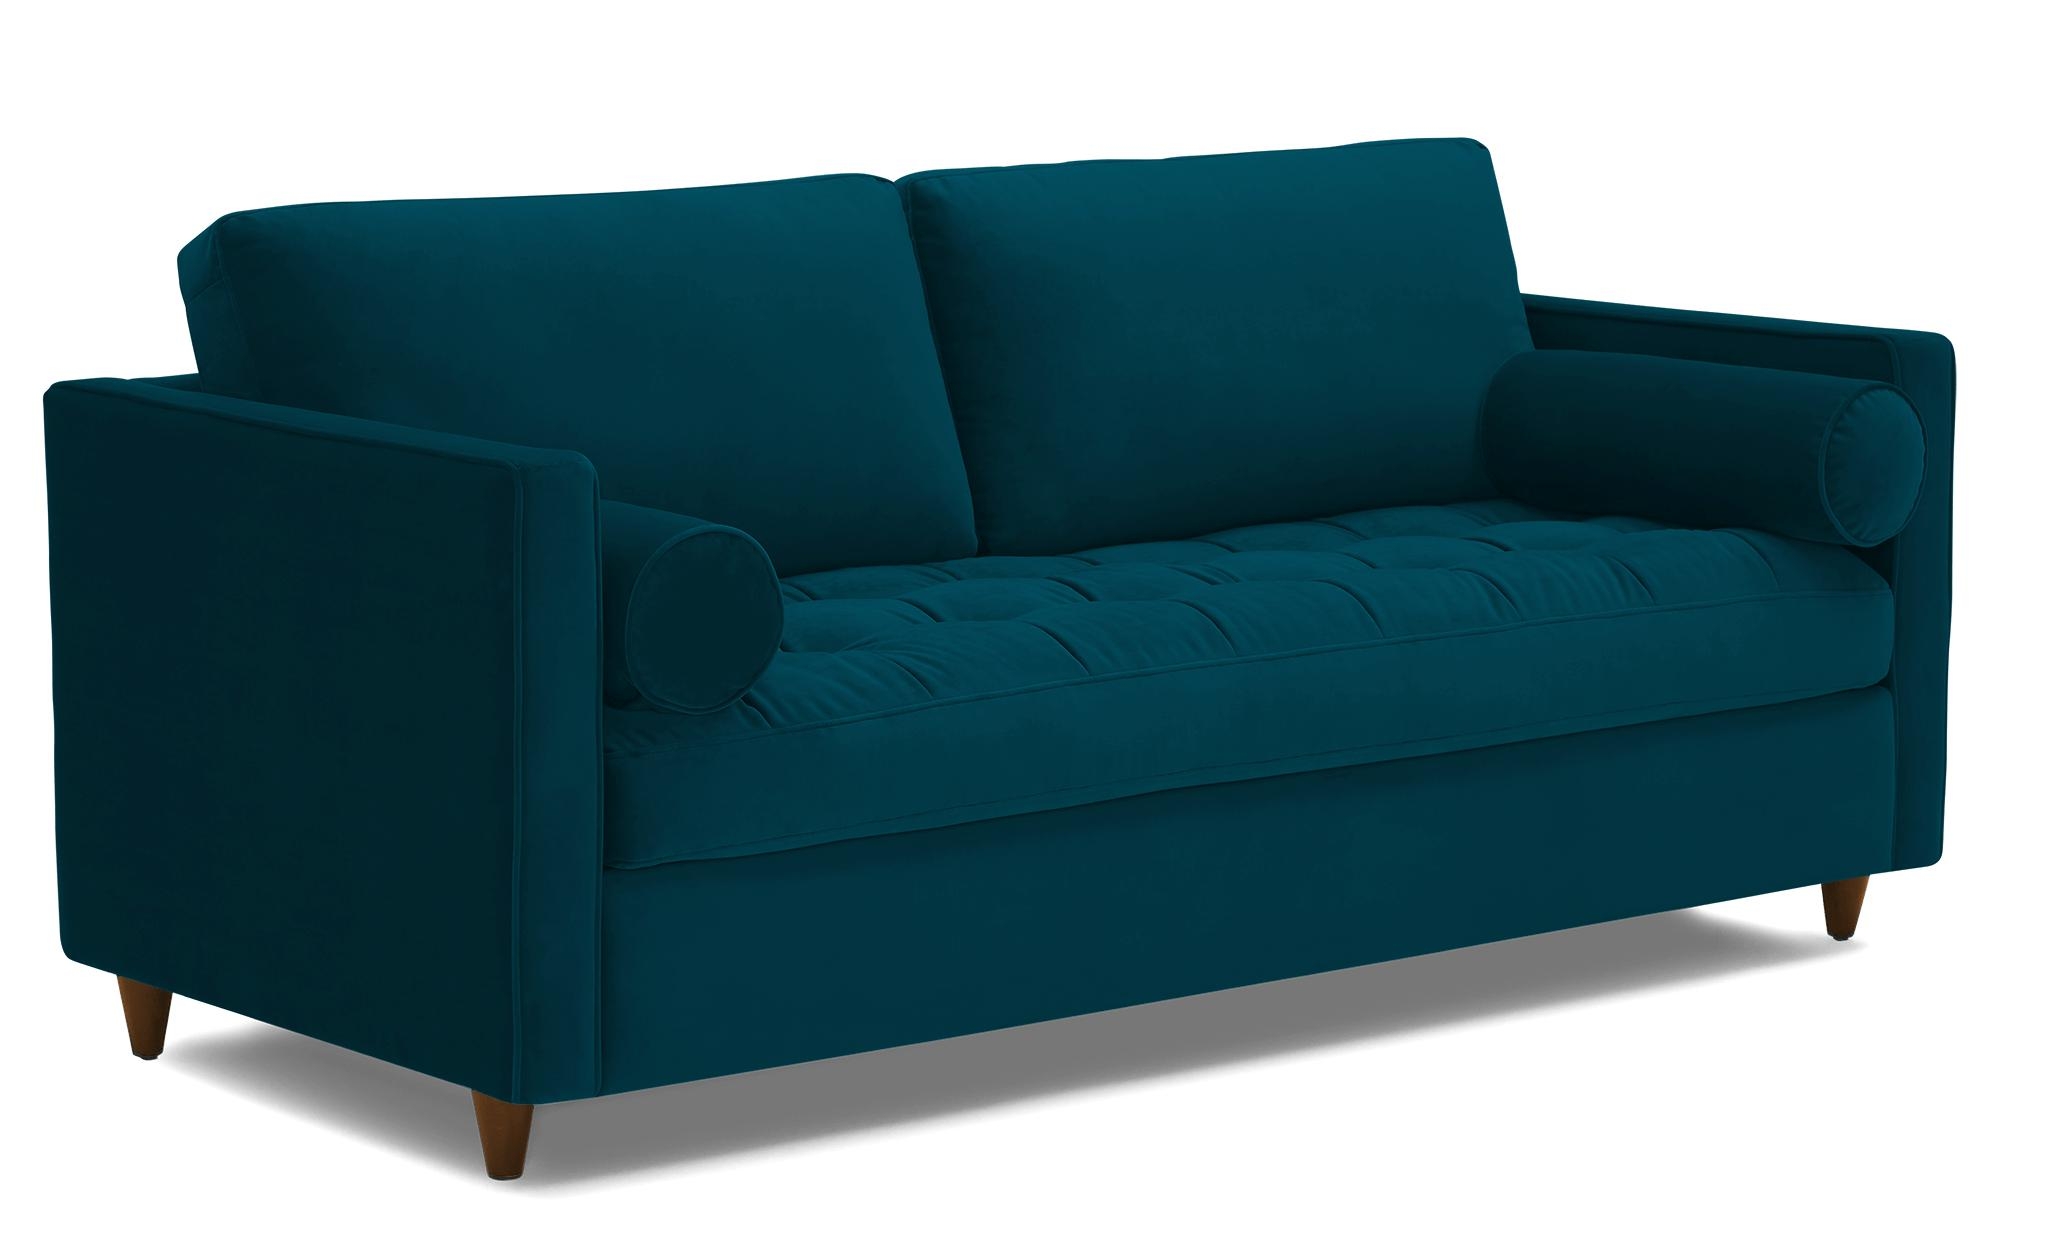 Blue Briar Mid Century Modern Sleeper Sofa - Key Largo Zenith Teal - Mocha - Image 1